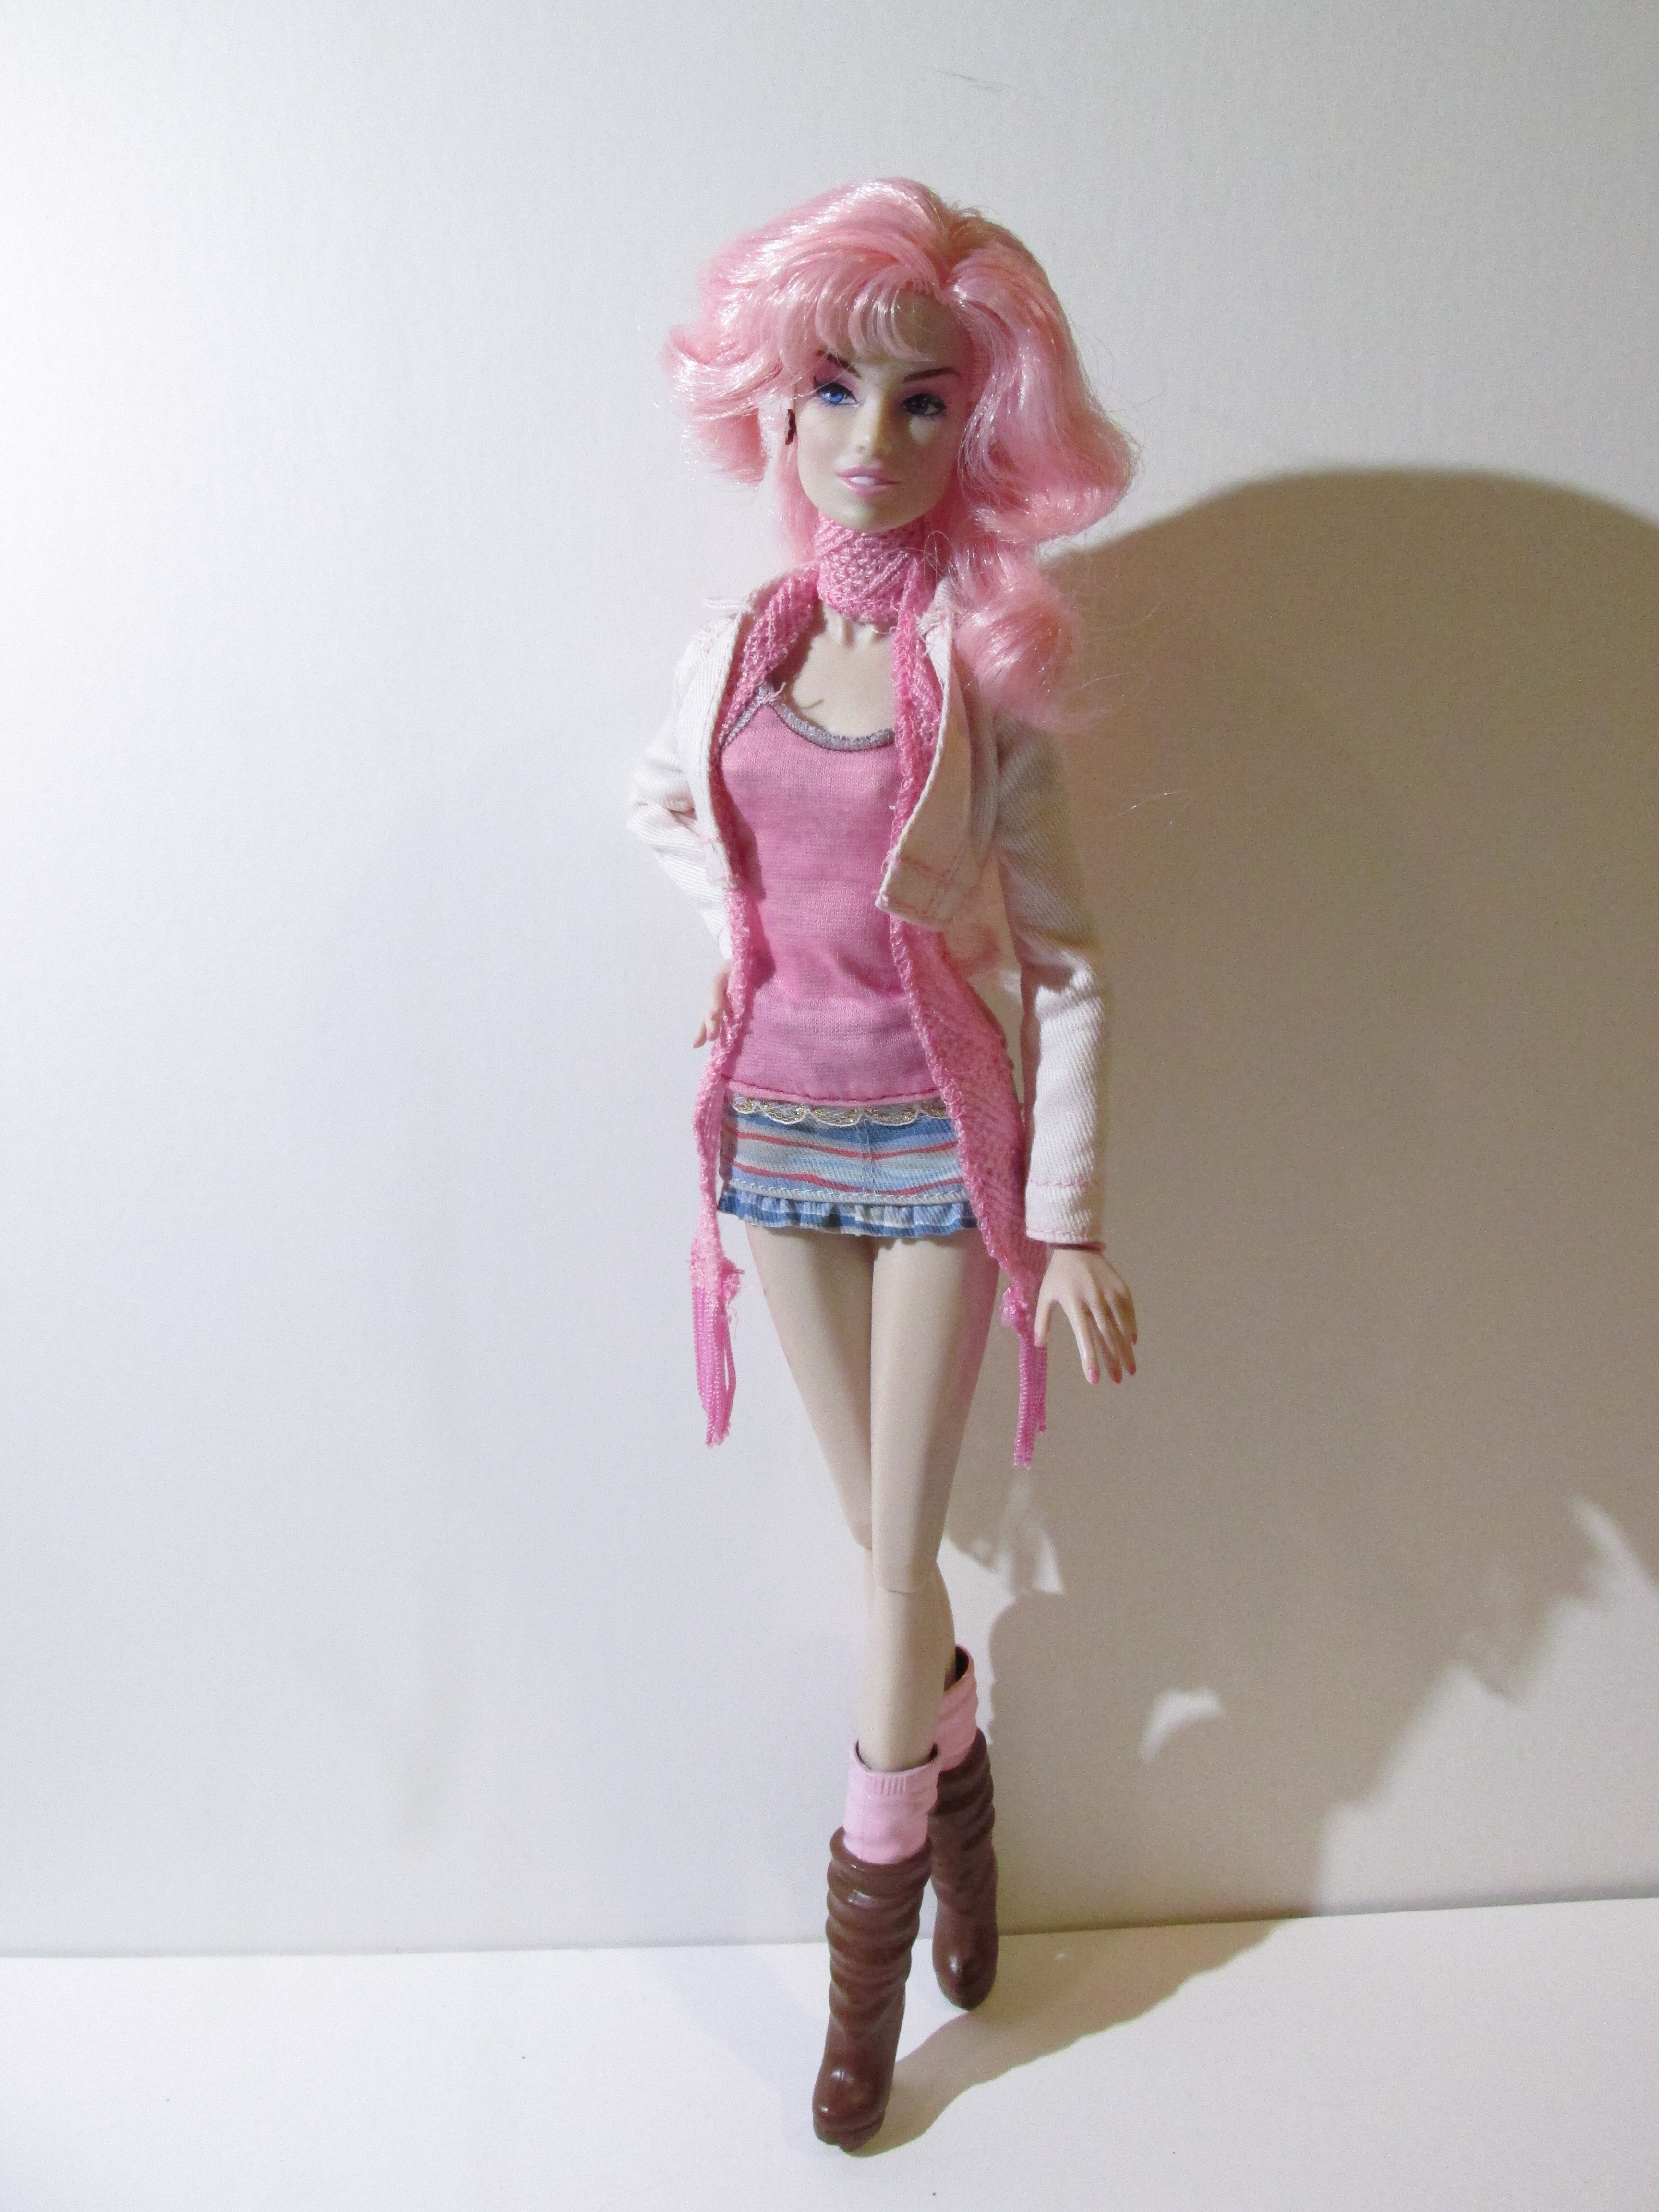 4 Mini  'Architect'  Magazines Barbie Blythe Fashion Doll size 1:6 playscale 